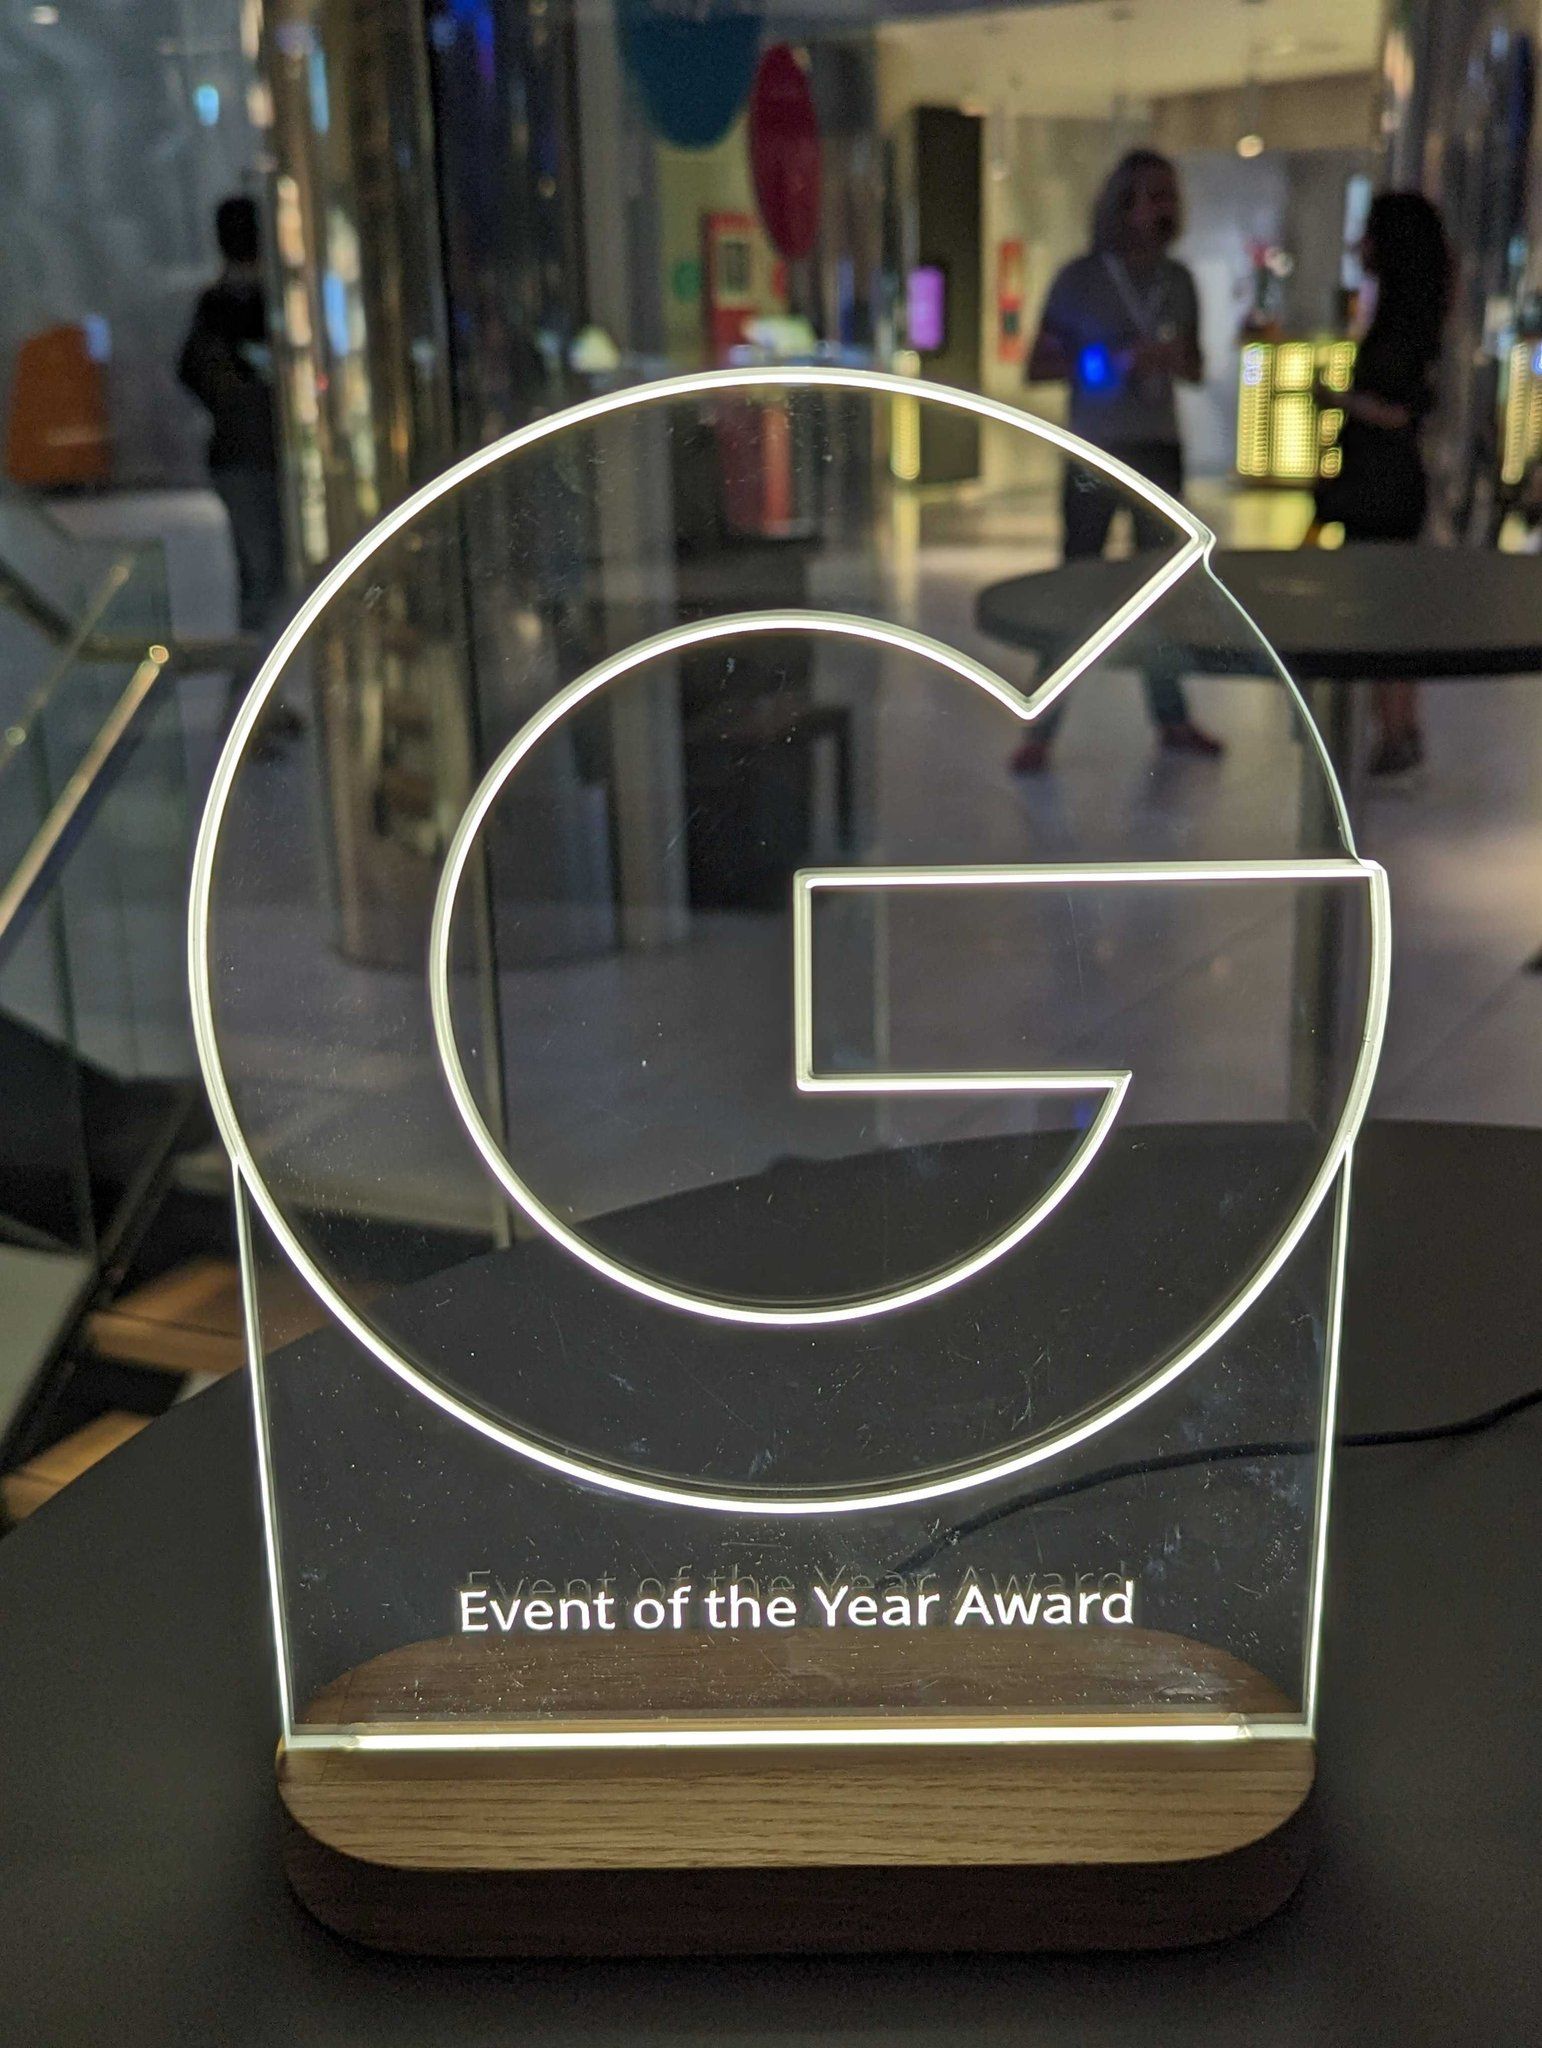 Award de google pour "l'event of the year"